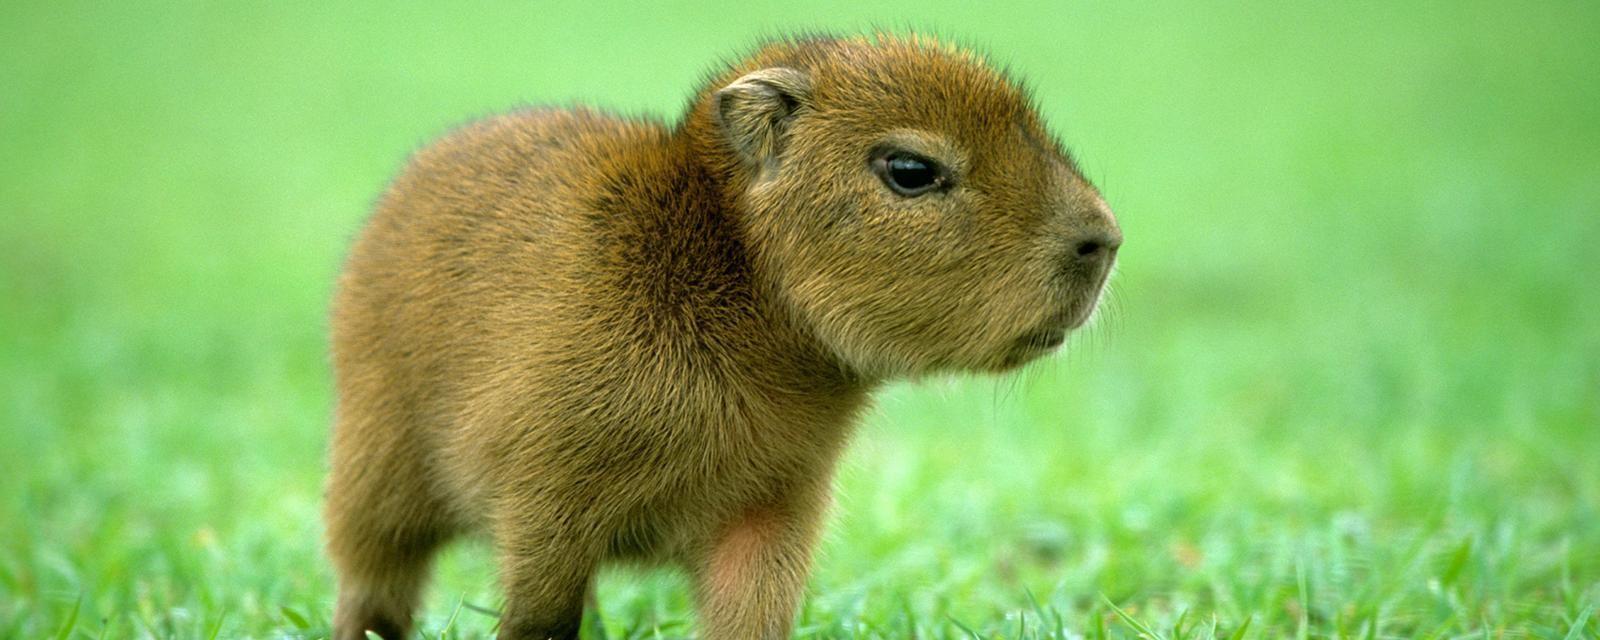 Capybara audio and memes are taking over TikTok  Polygon